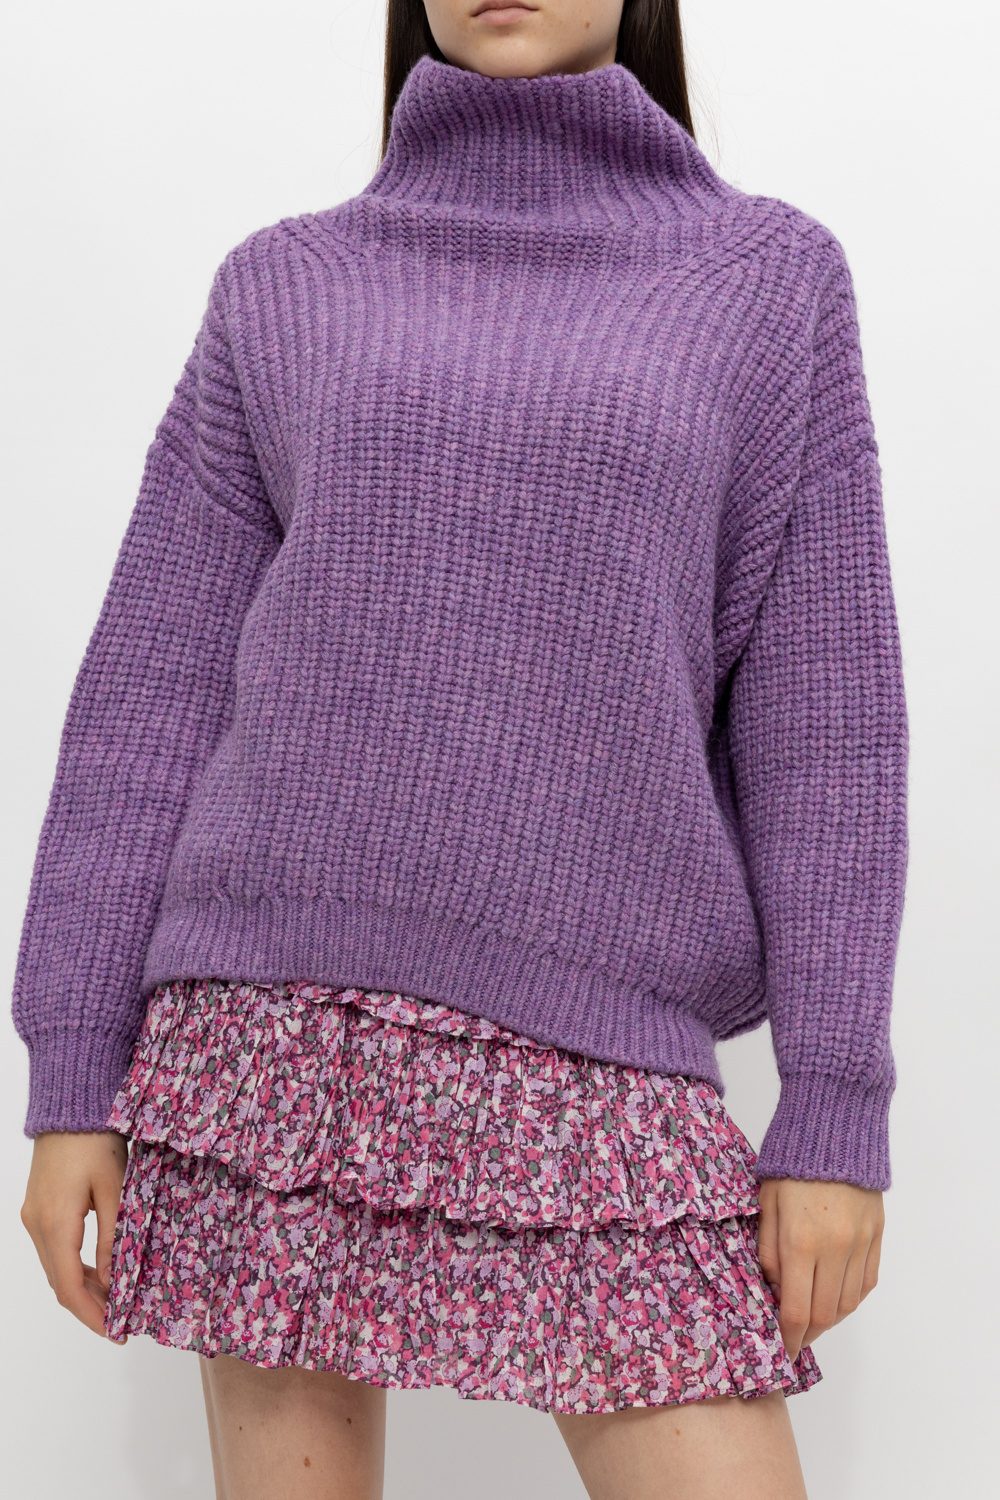 Isabel Marant ‘Iris’ turtleneck this sweater